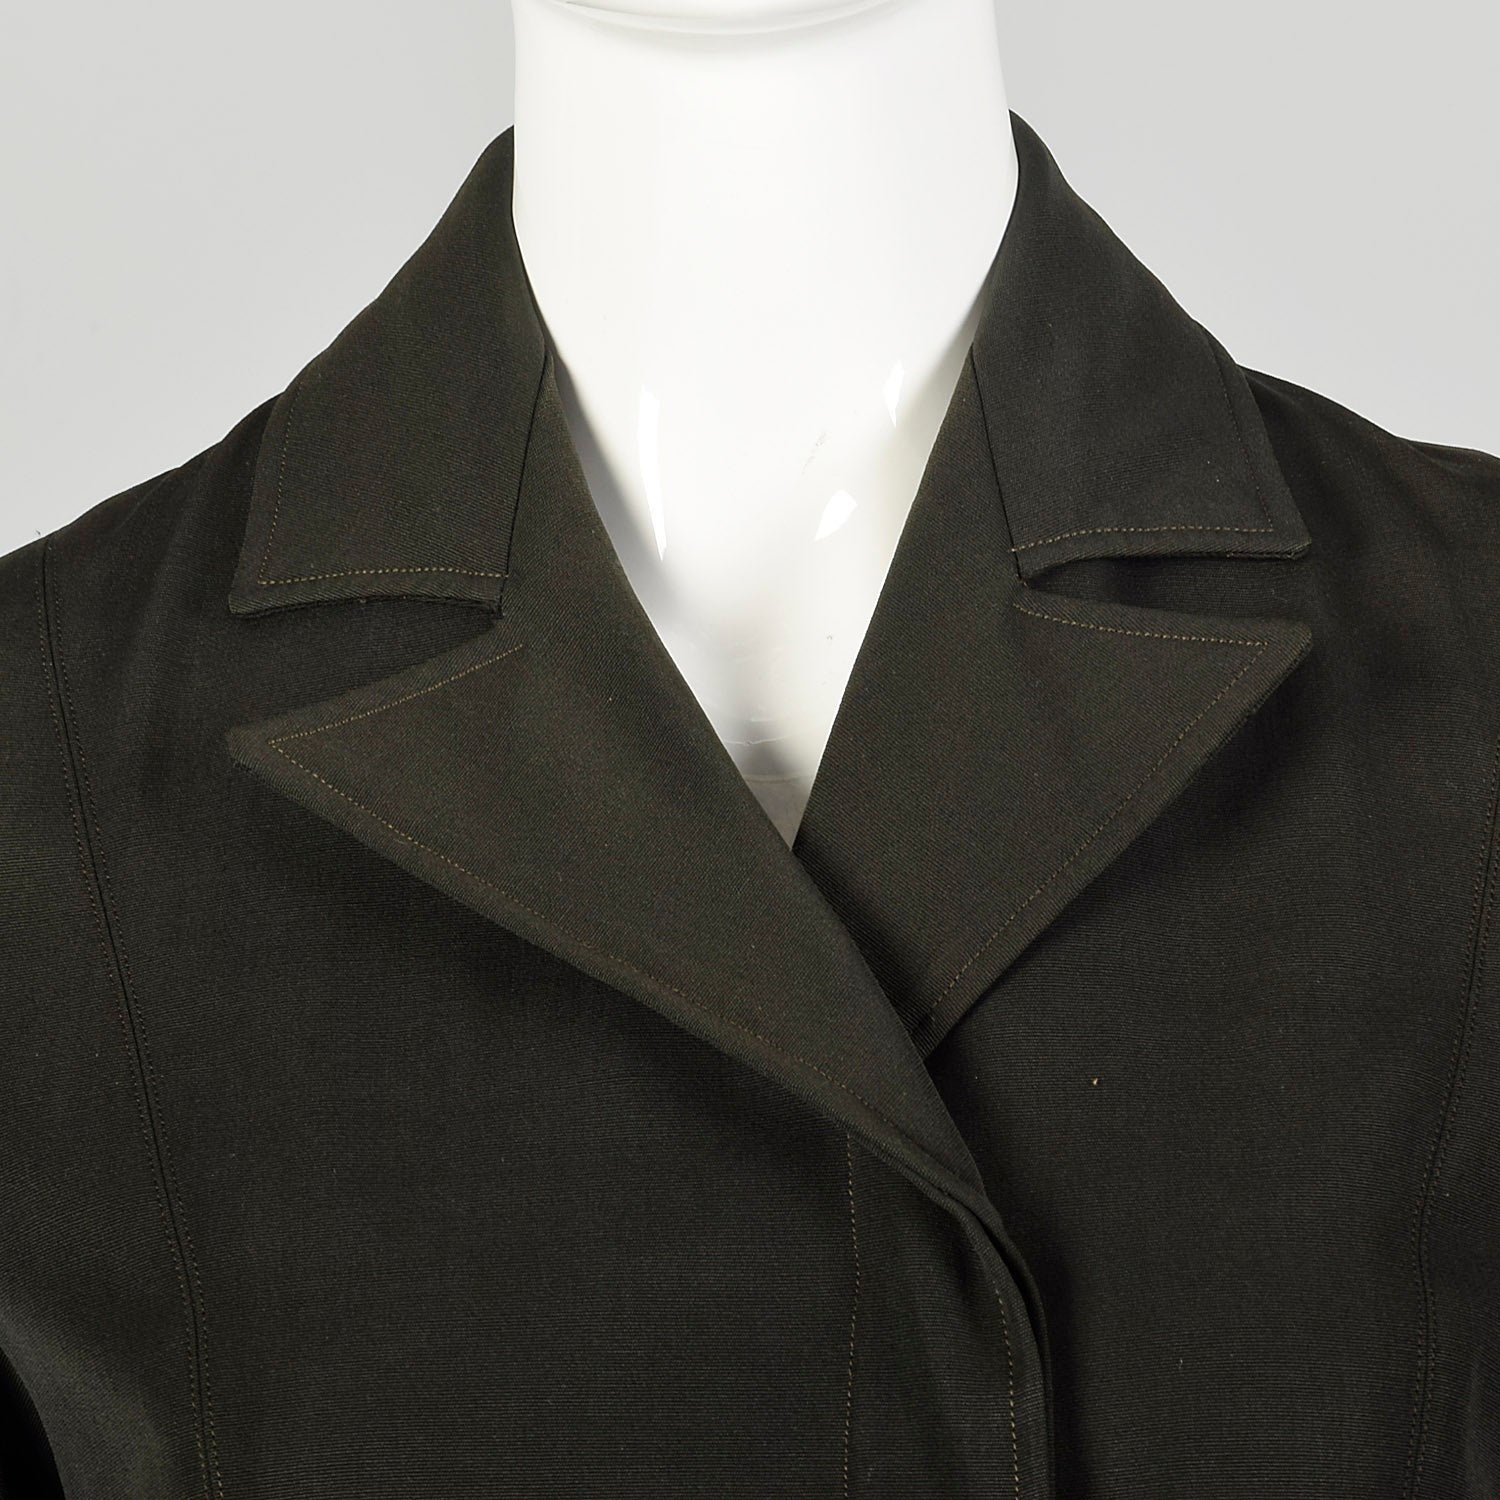 XXS 1880s Wearable Victorian Jacket Dark Green Hourglass Shape Wasp Waist Mutton Sleeves